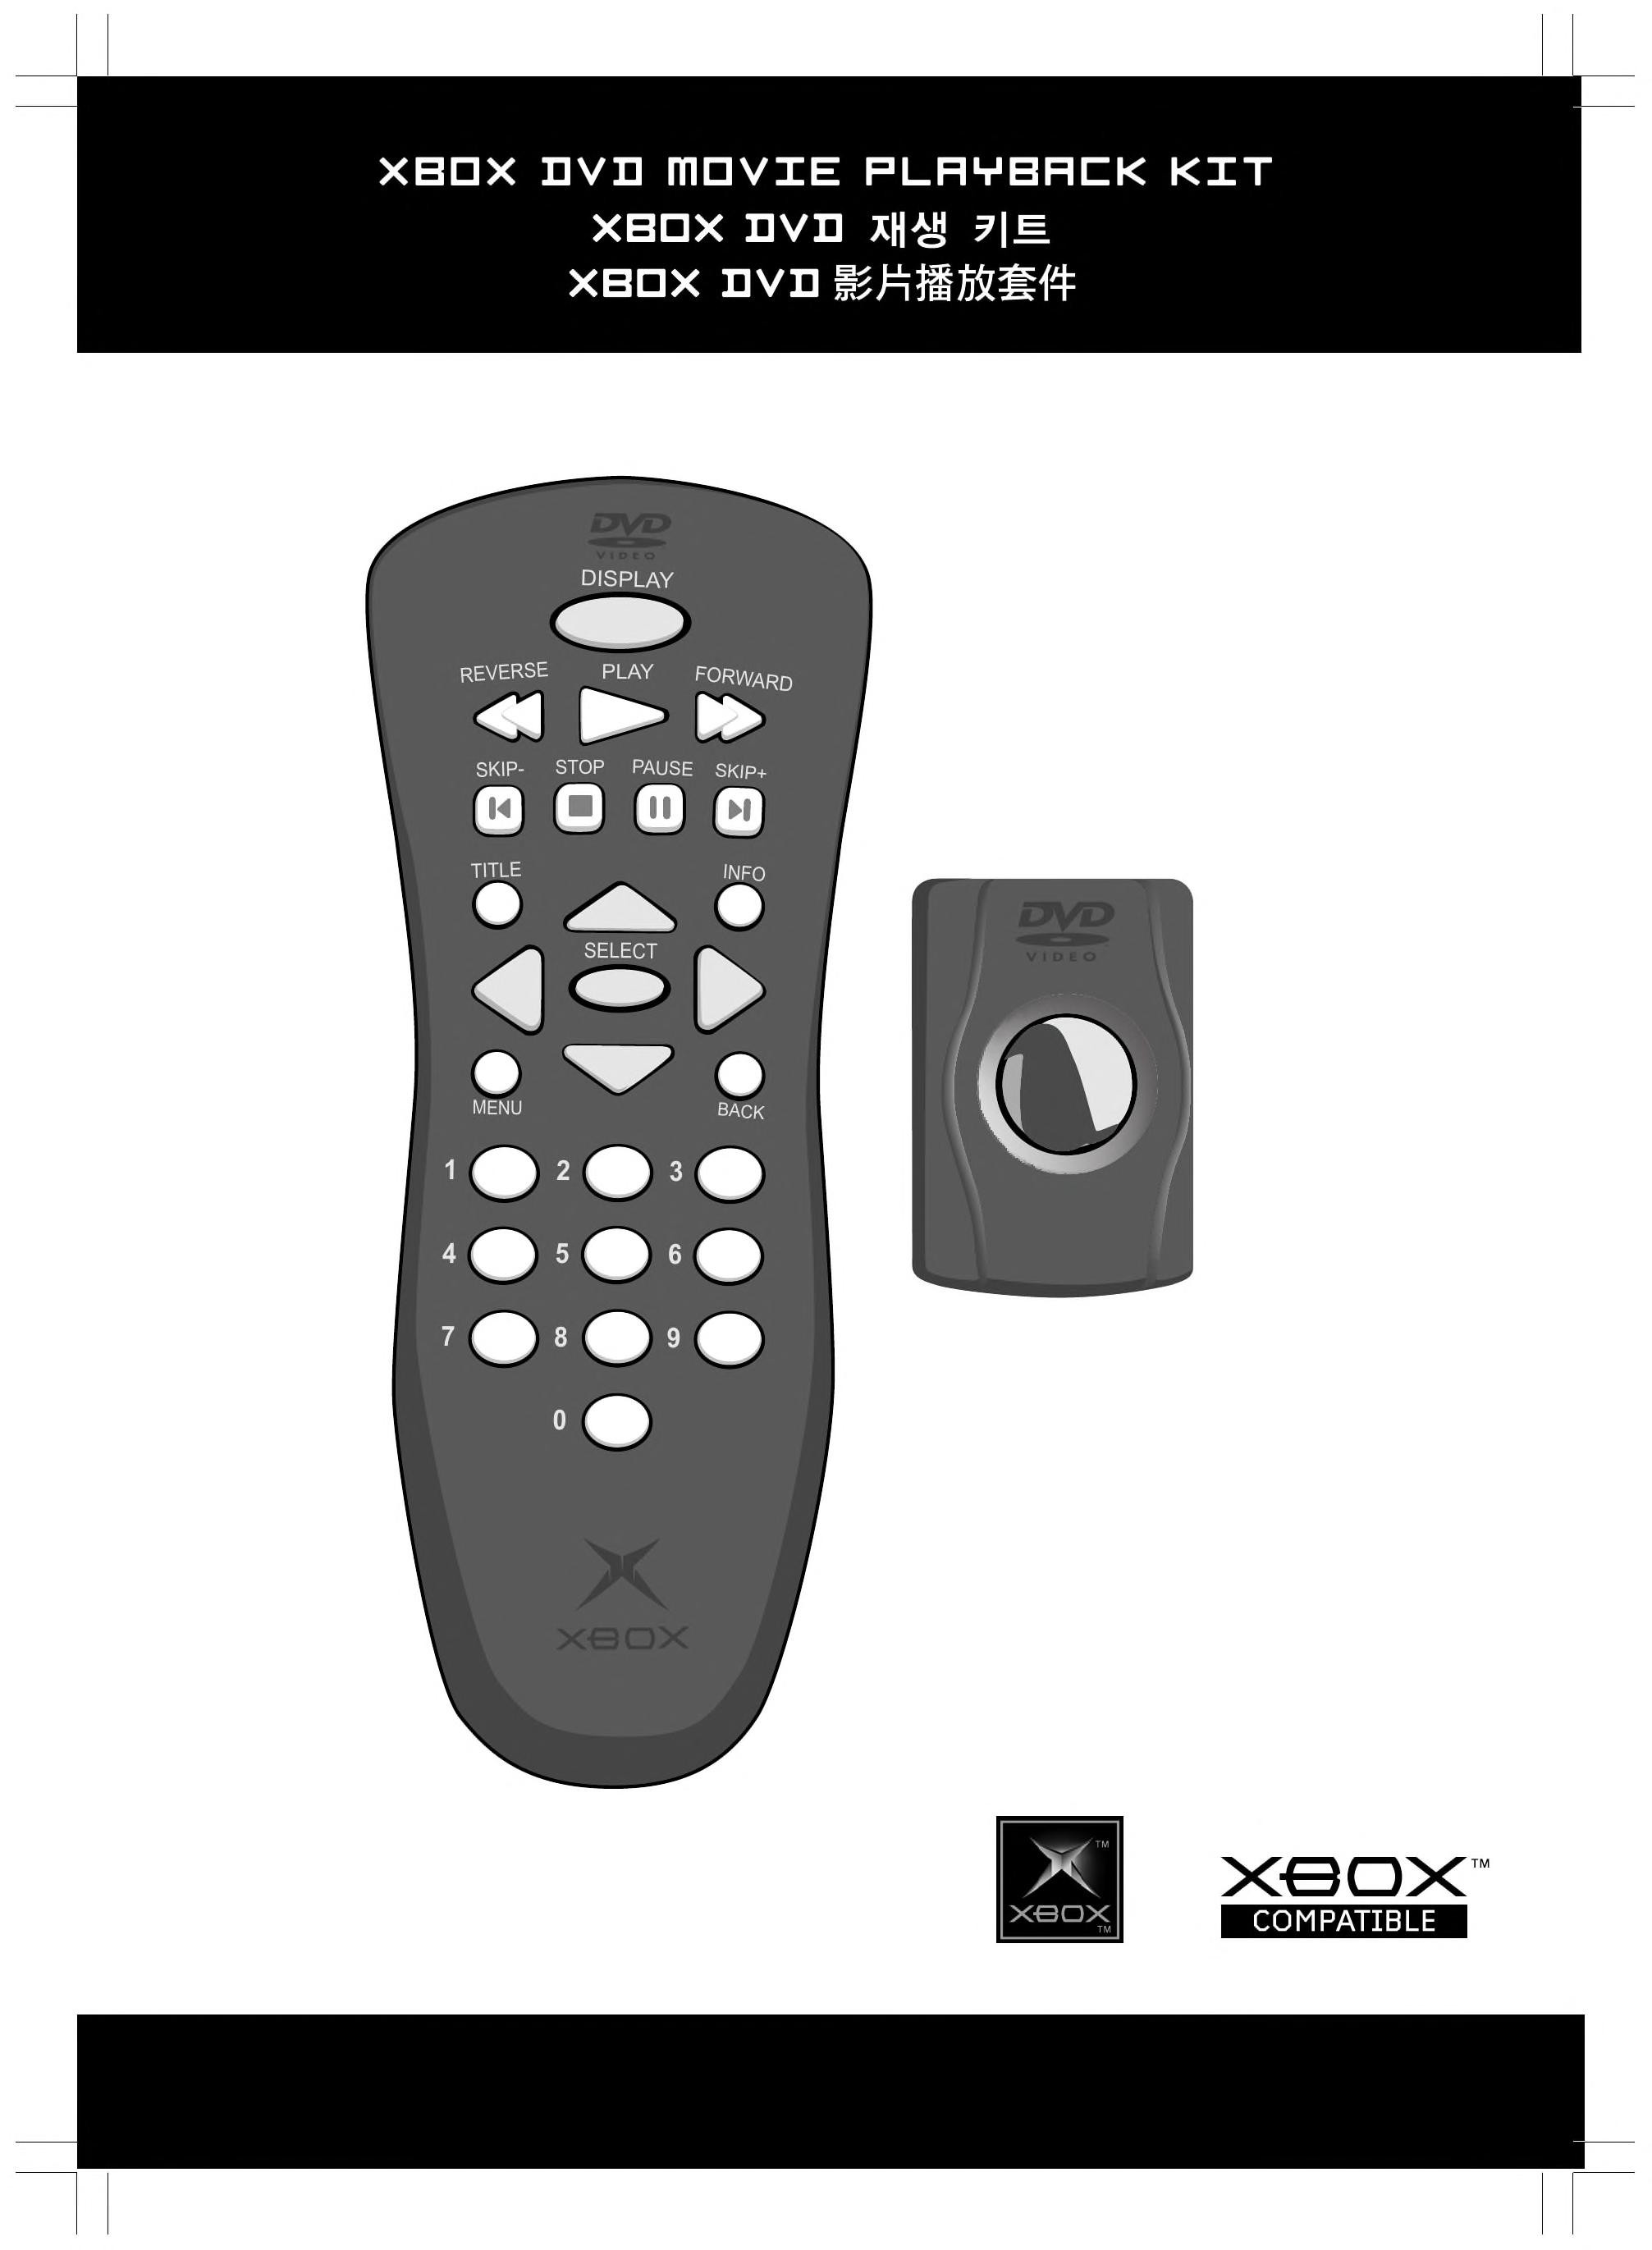 Handleiding - DVD Remote Movie Kit voor Xbox Classic - Xbox Original Hardware